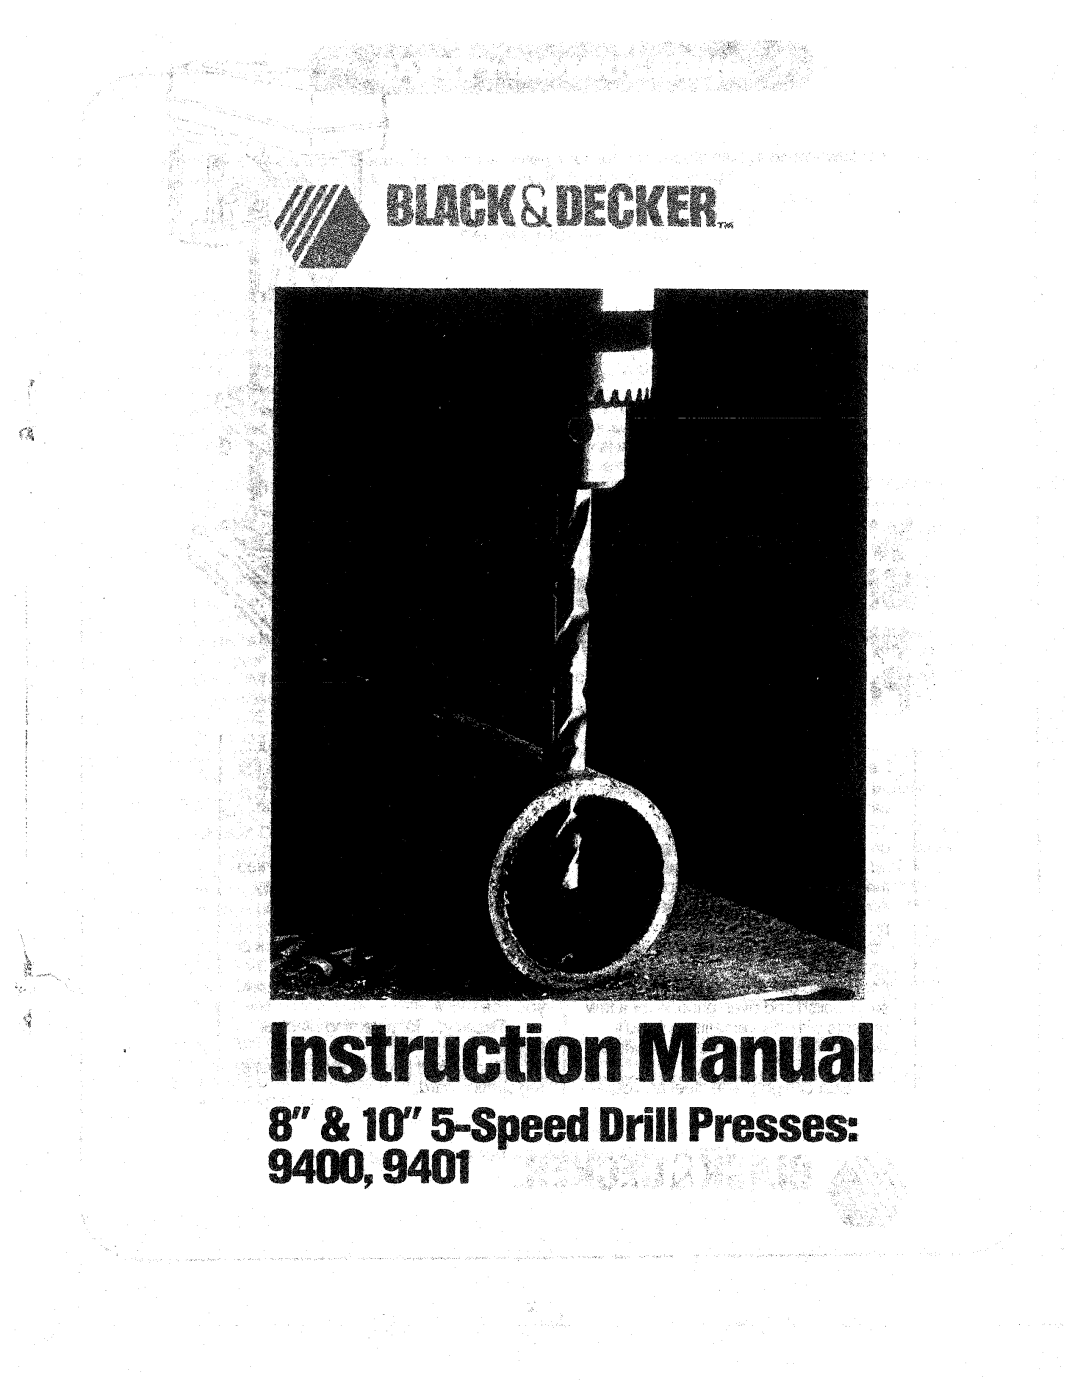 Black & Decker 9401, 9400 manual 